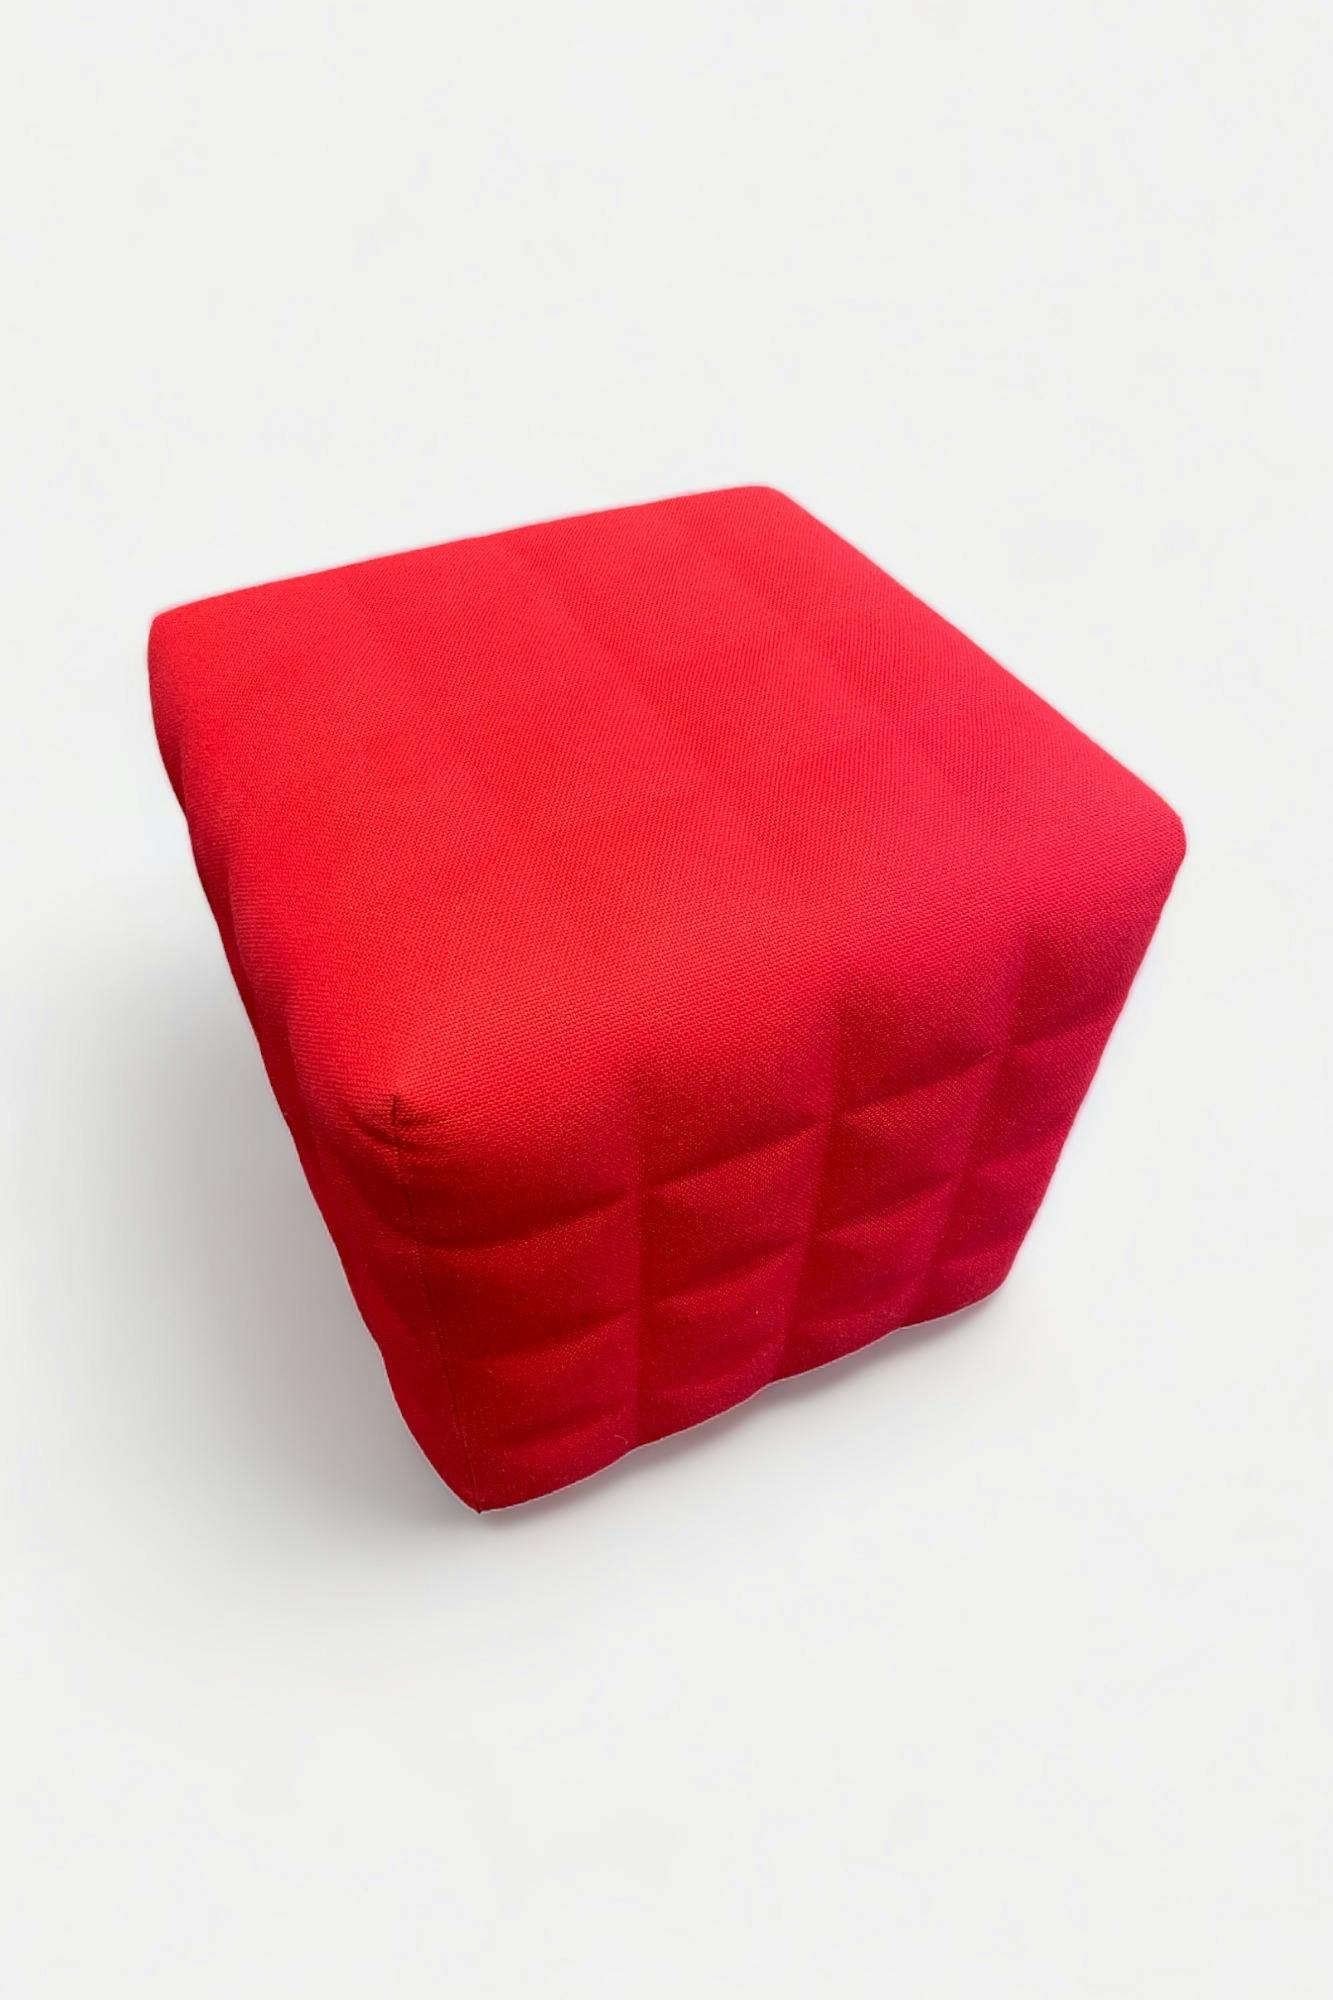 Buzzi space red cubic seat - Relieve Furniture